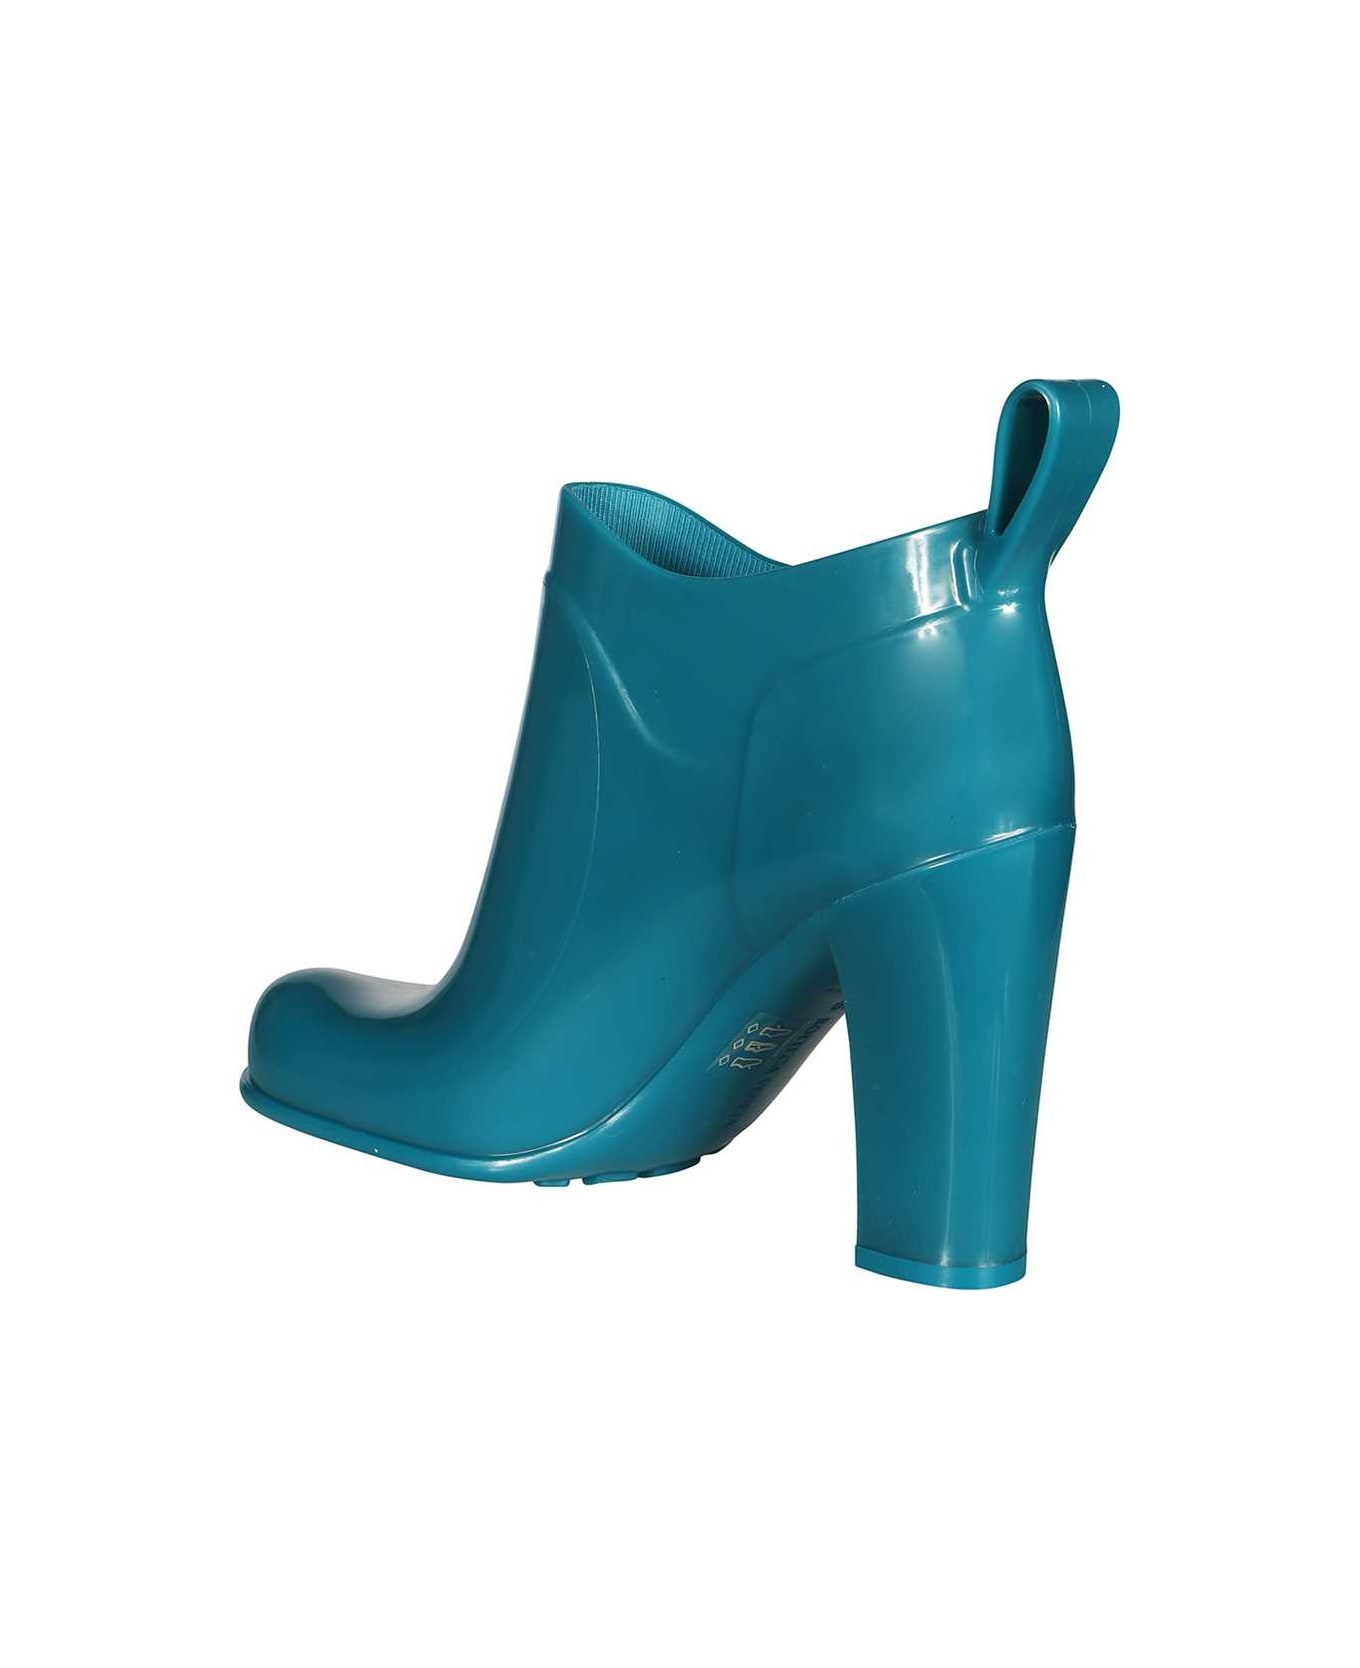 Bottega Veneta Shine Rubber Boots - turquoise